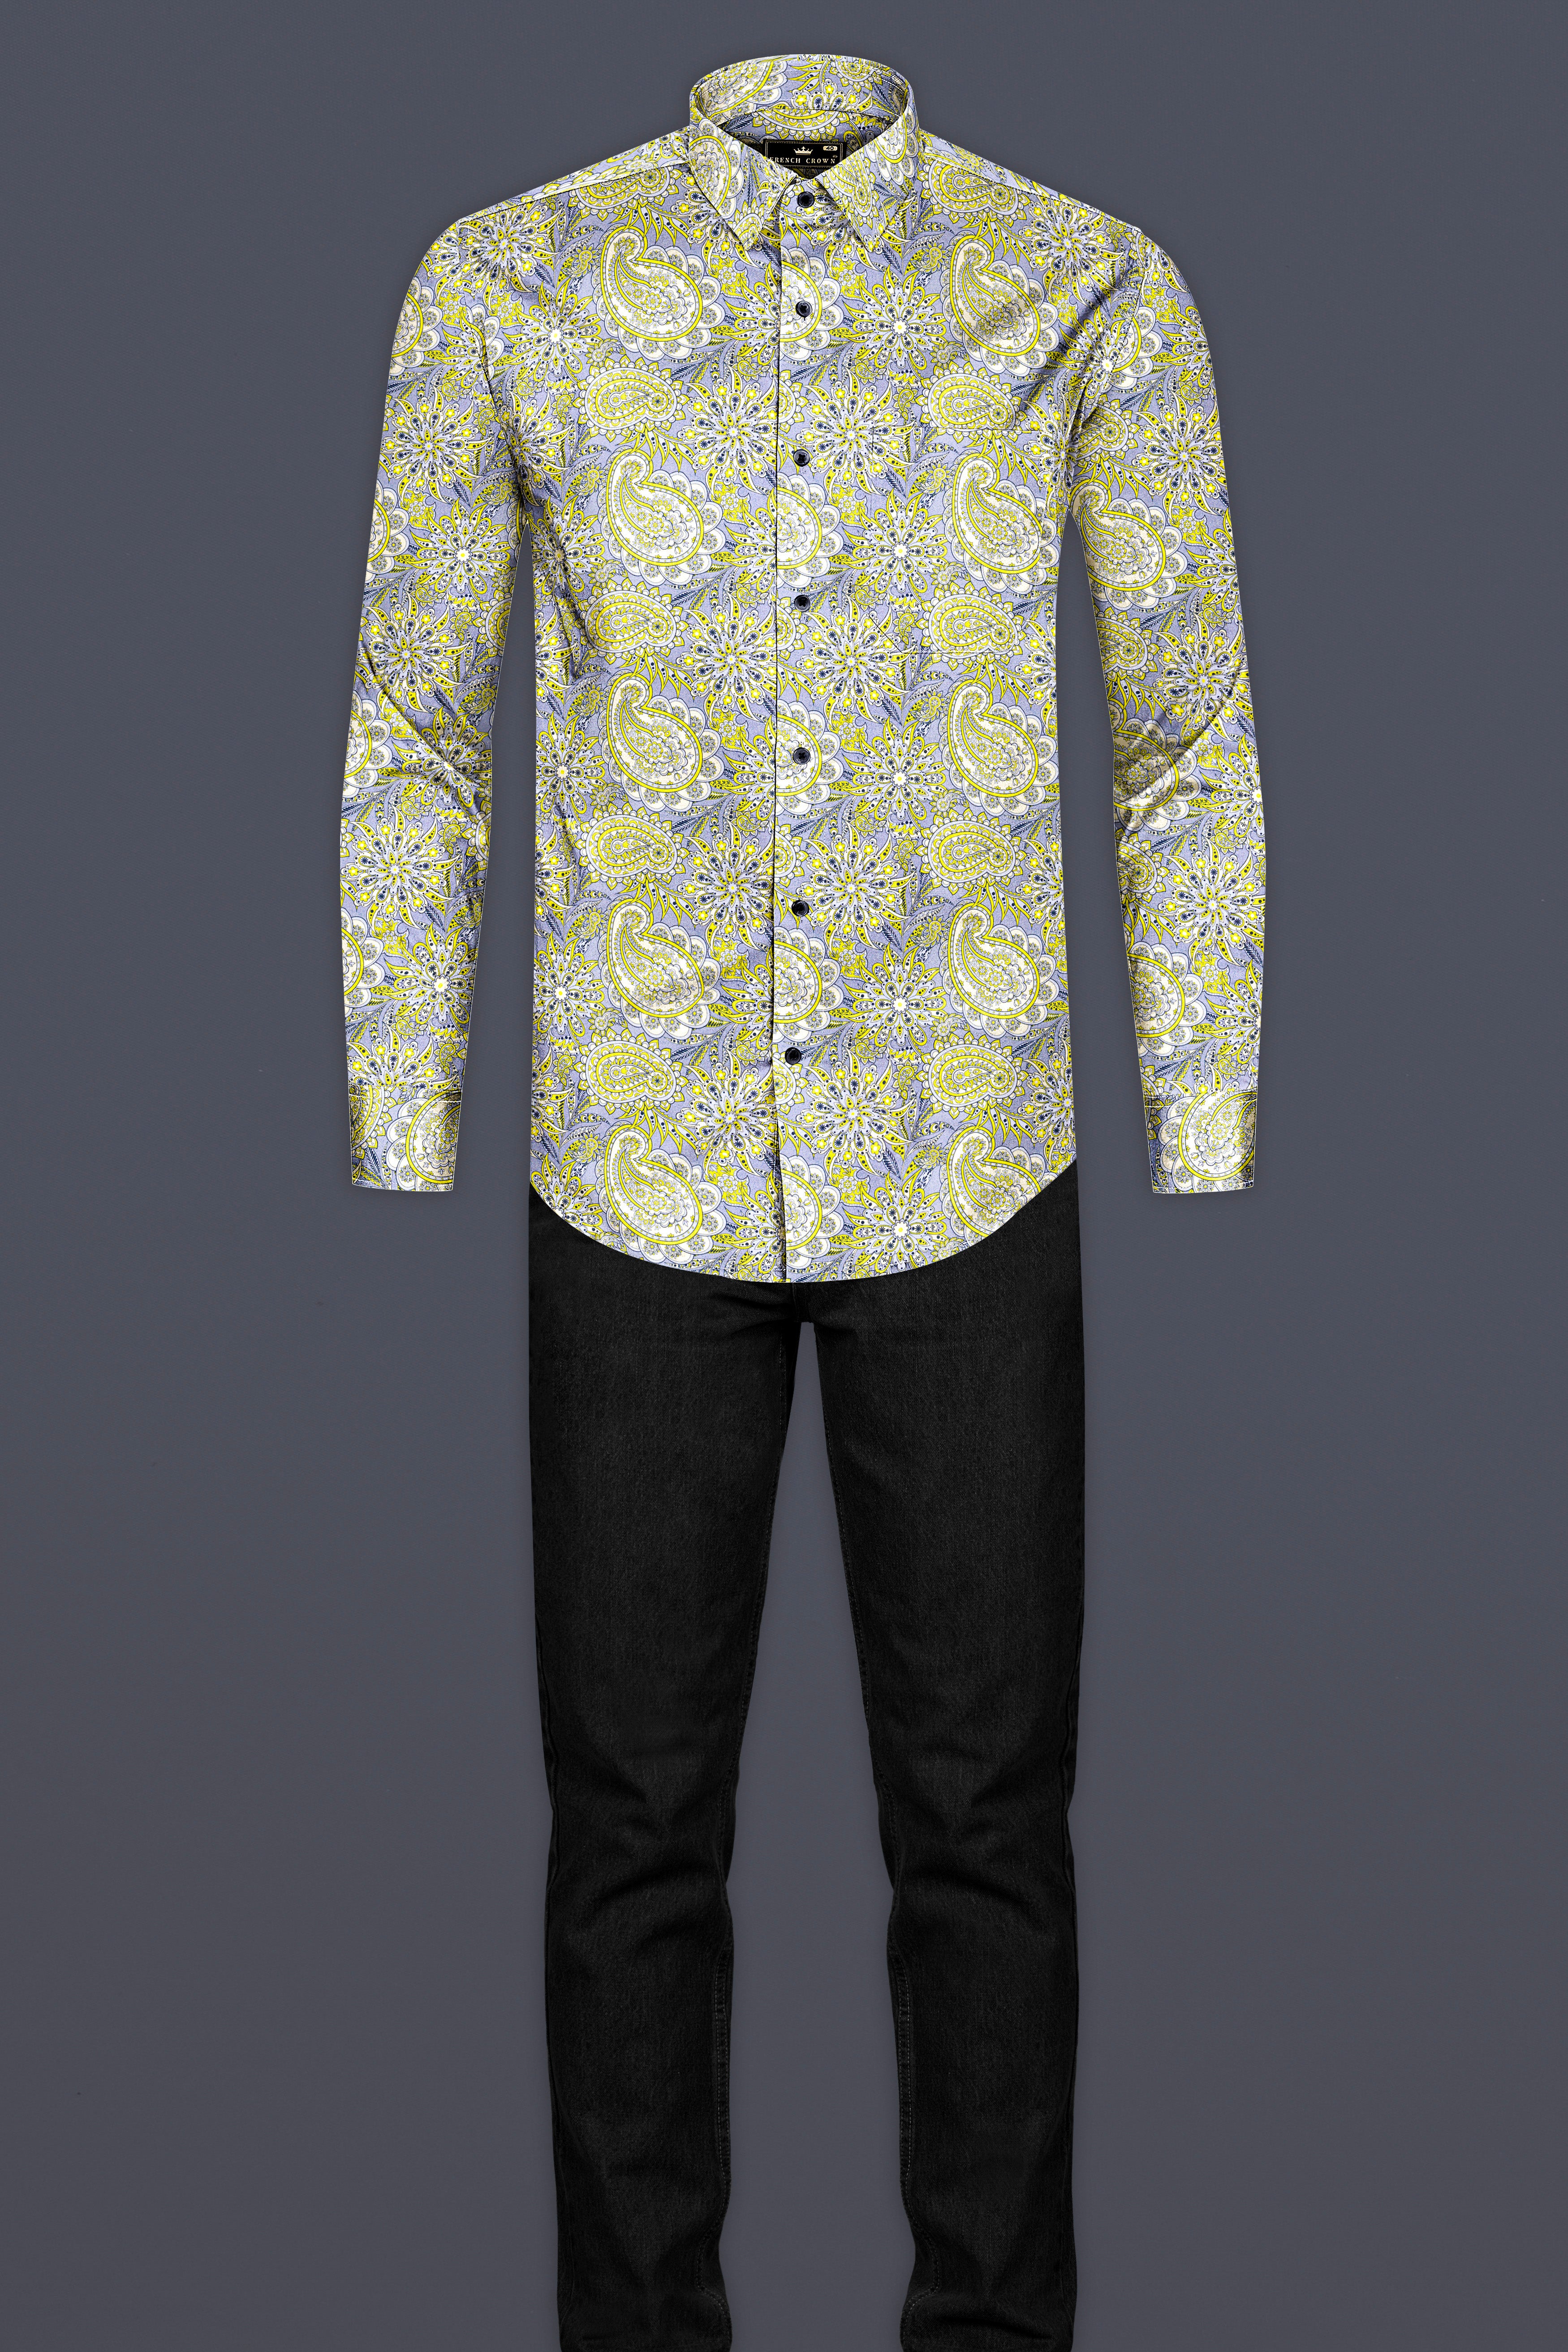 Gull Gray with Wild Rice Green Flower Valley Printed Super Soft Premium Cotton Shirt